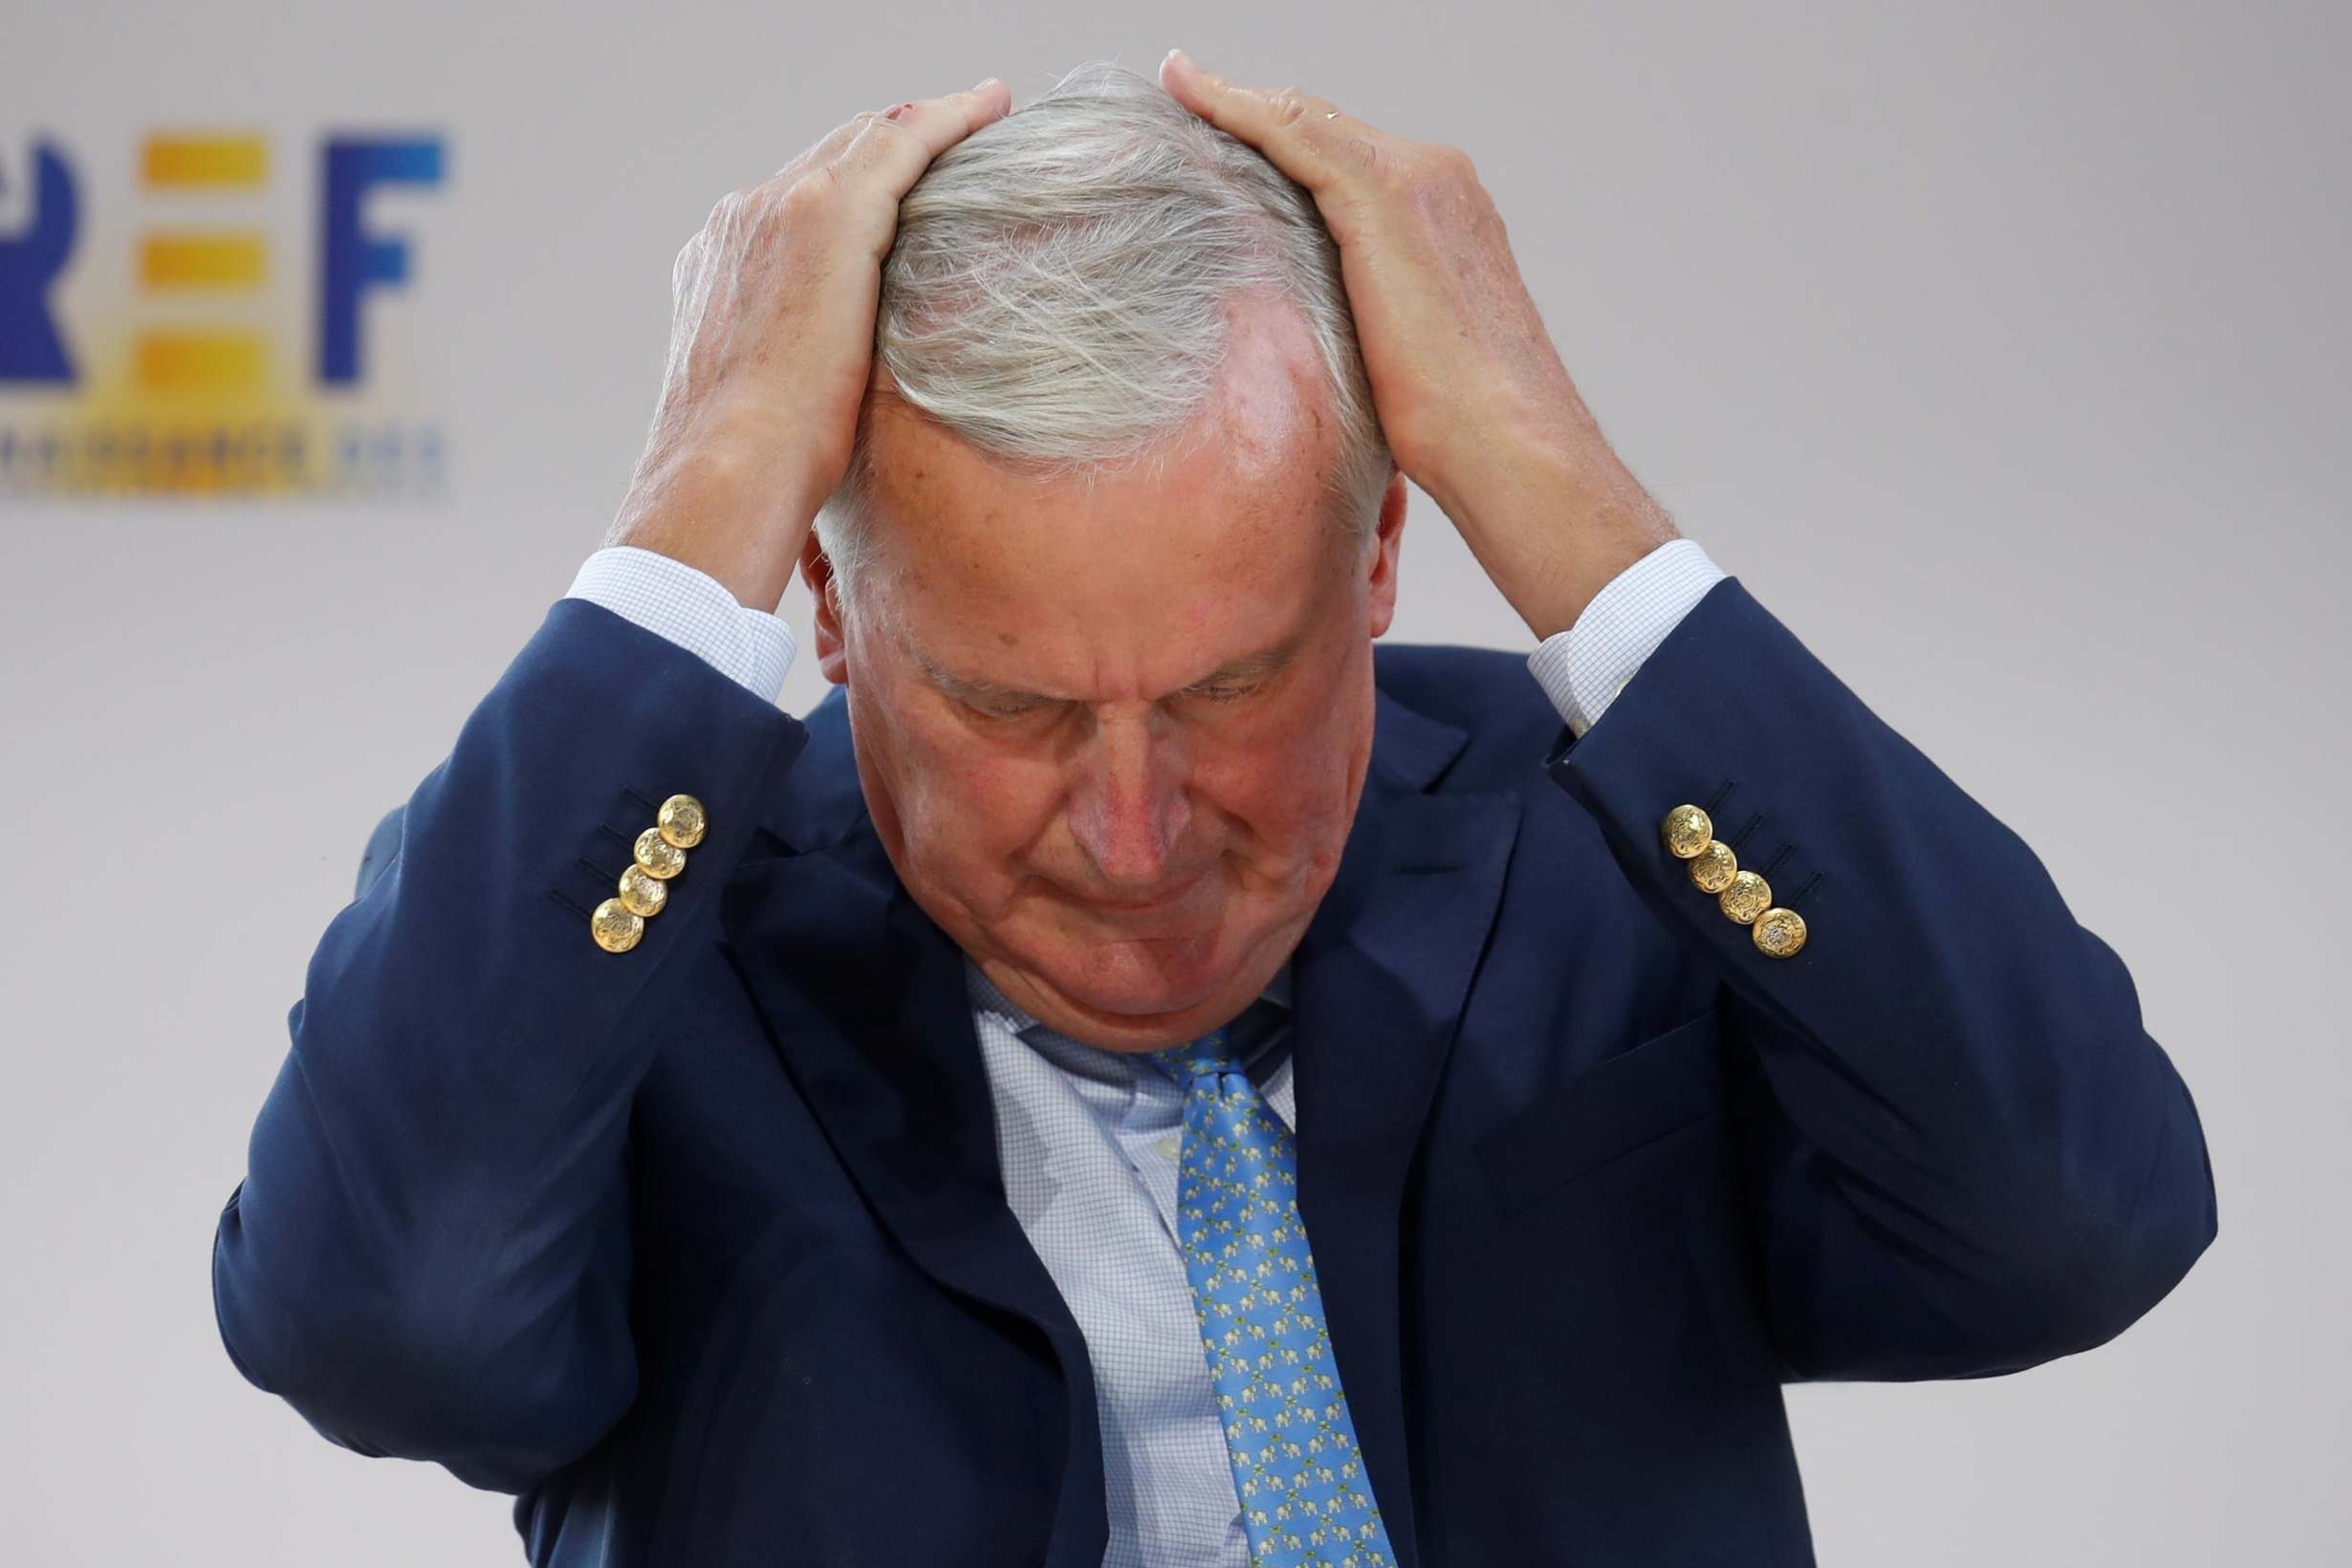 The EU’s Brexit negotiator Michel Barnier recently said trade talks were ‘going backwards more than forwards’